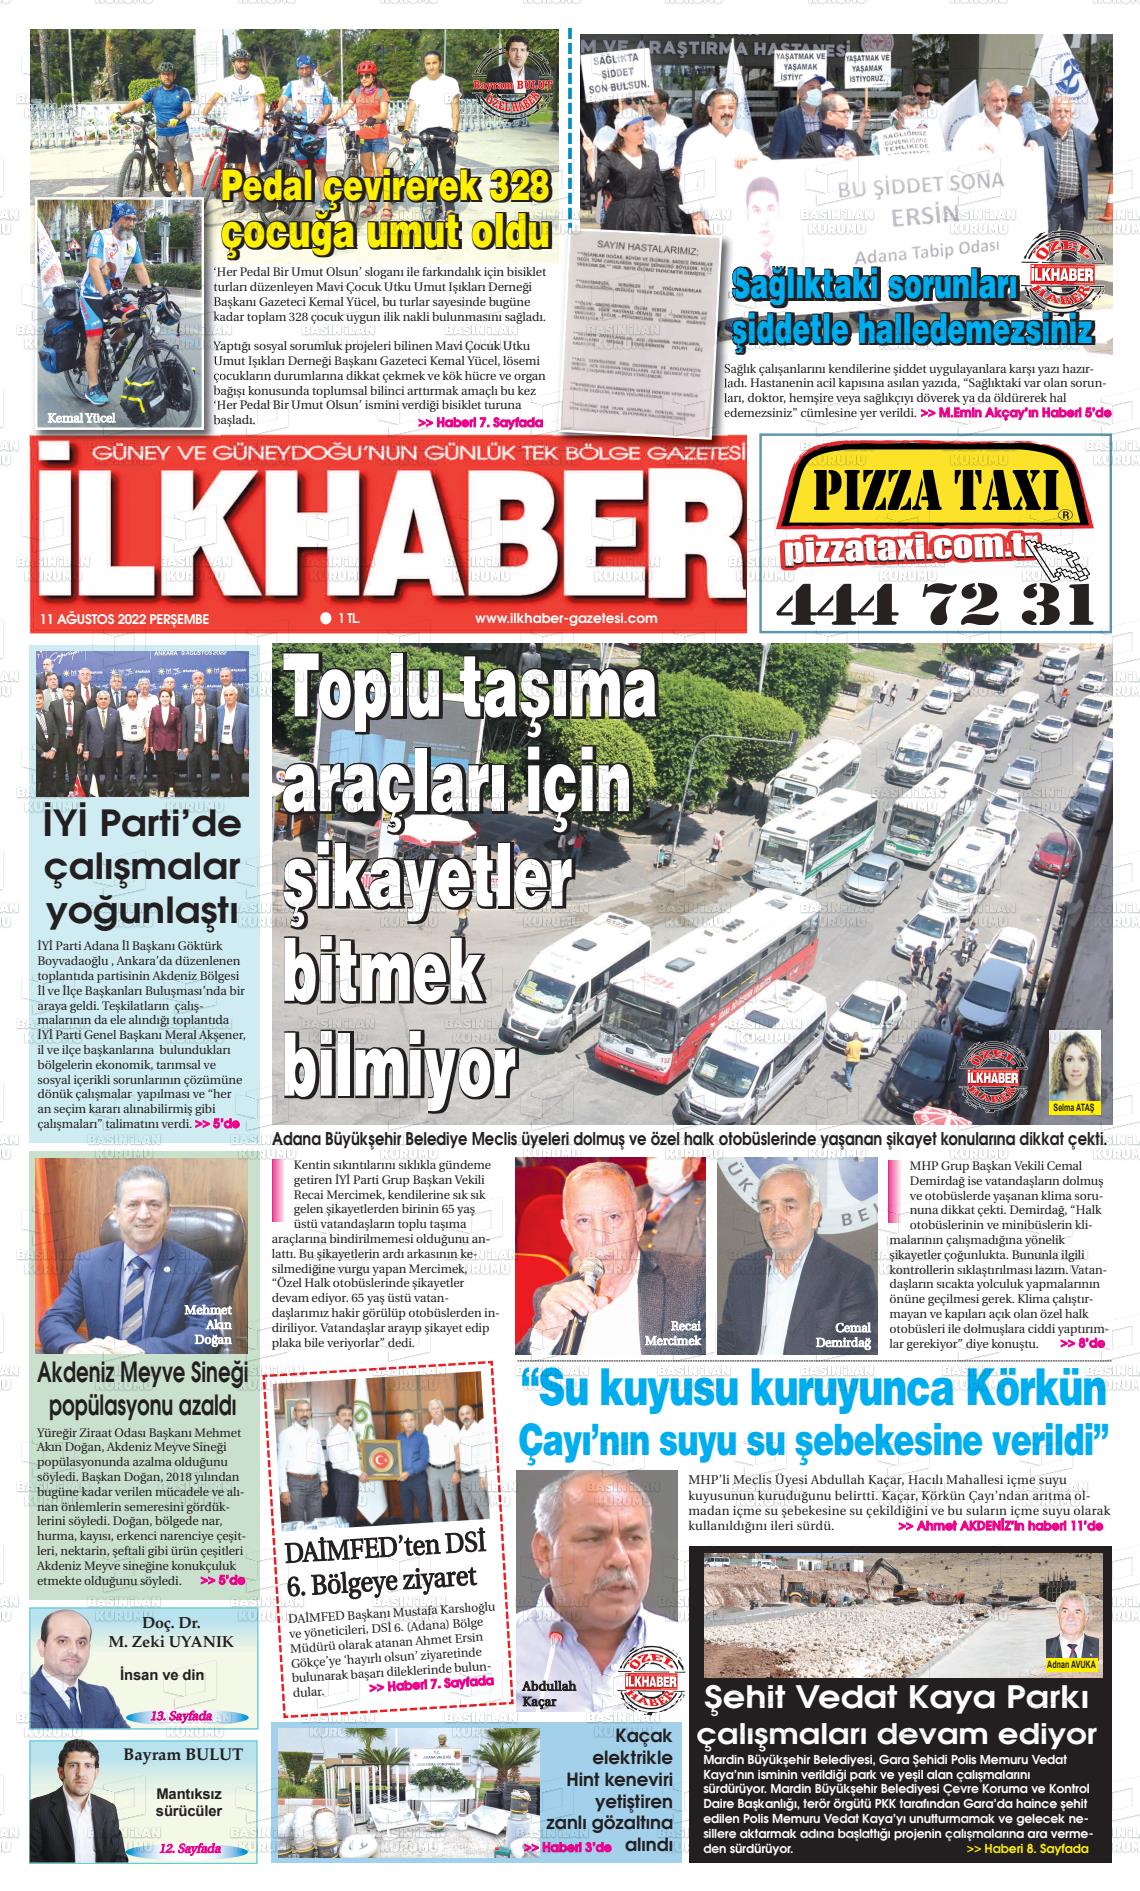 11 Ağustos 2022 İlk Haber Gazete Manşeti